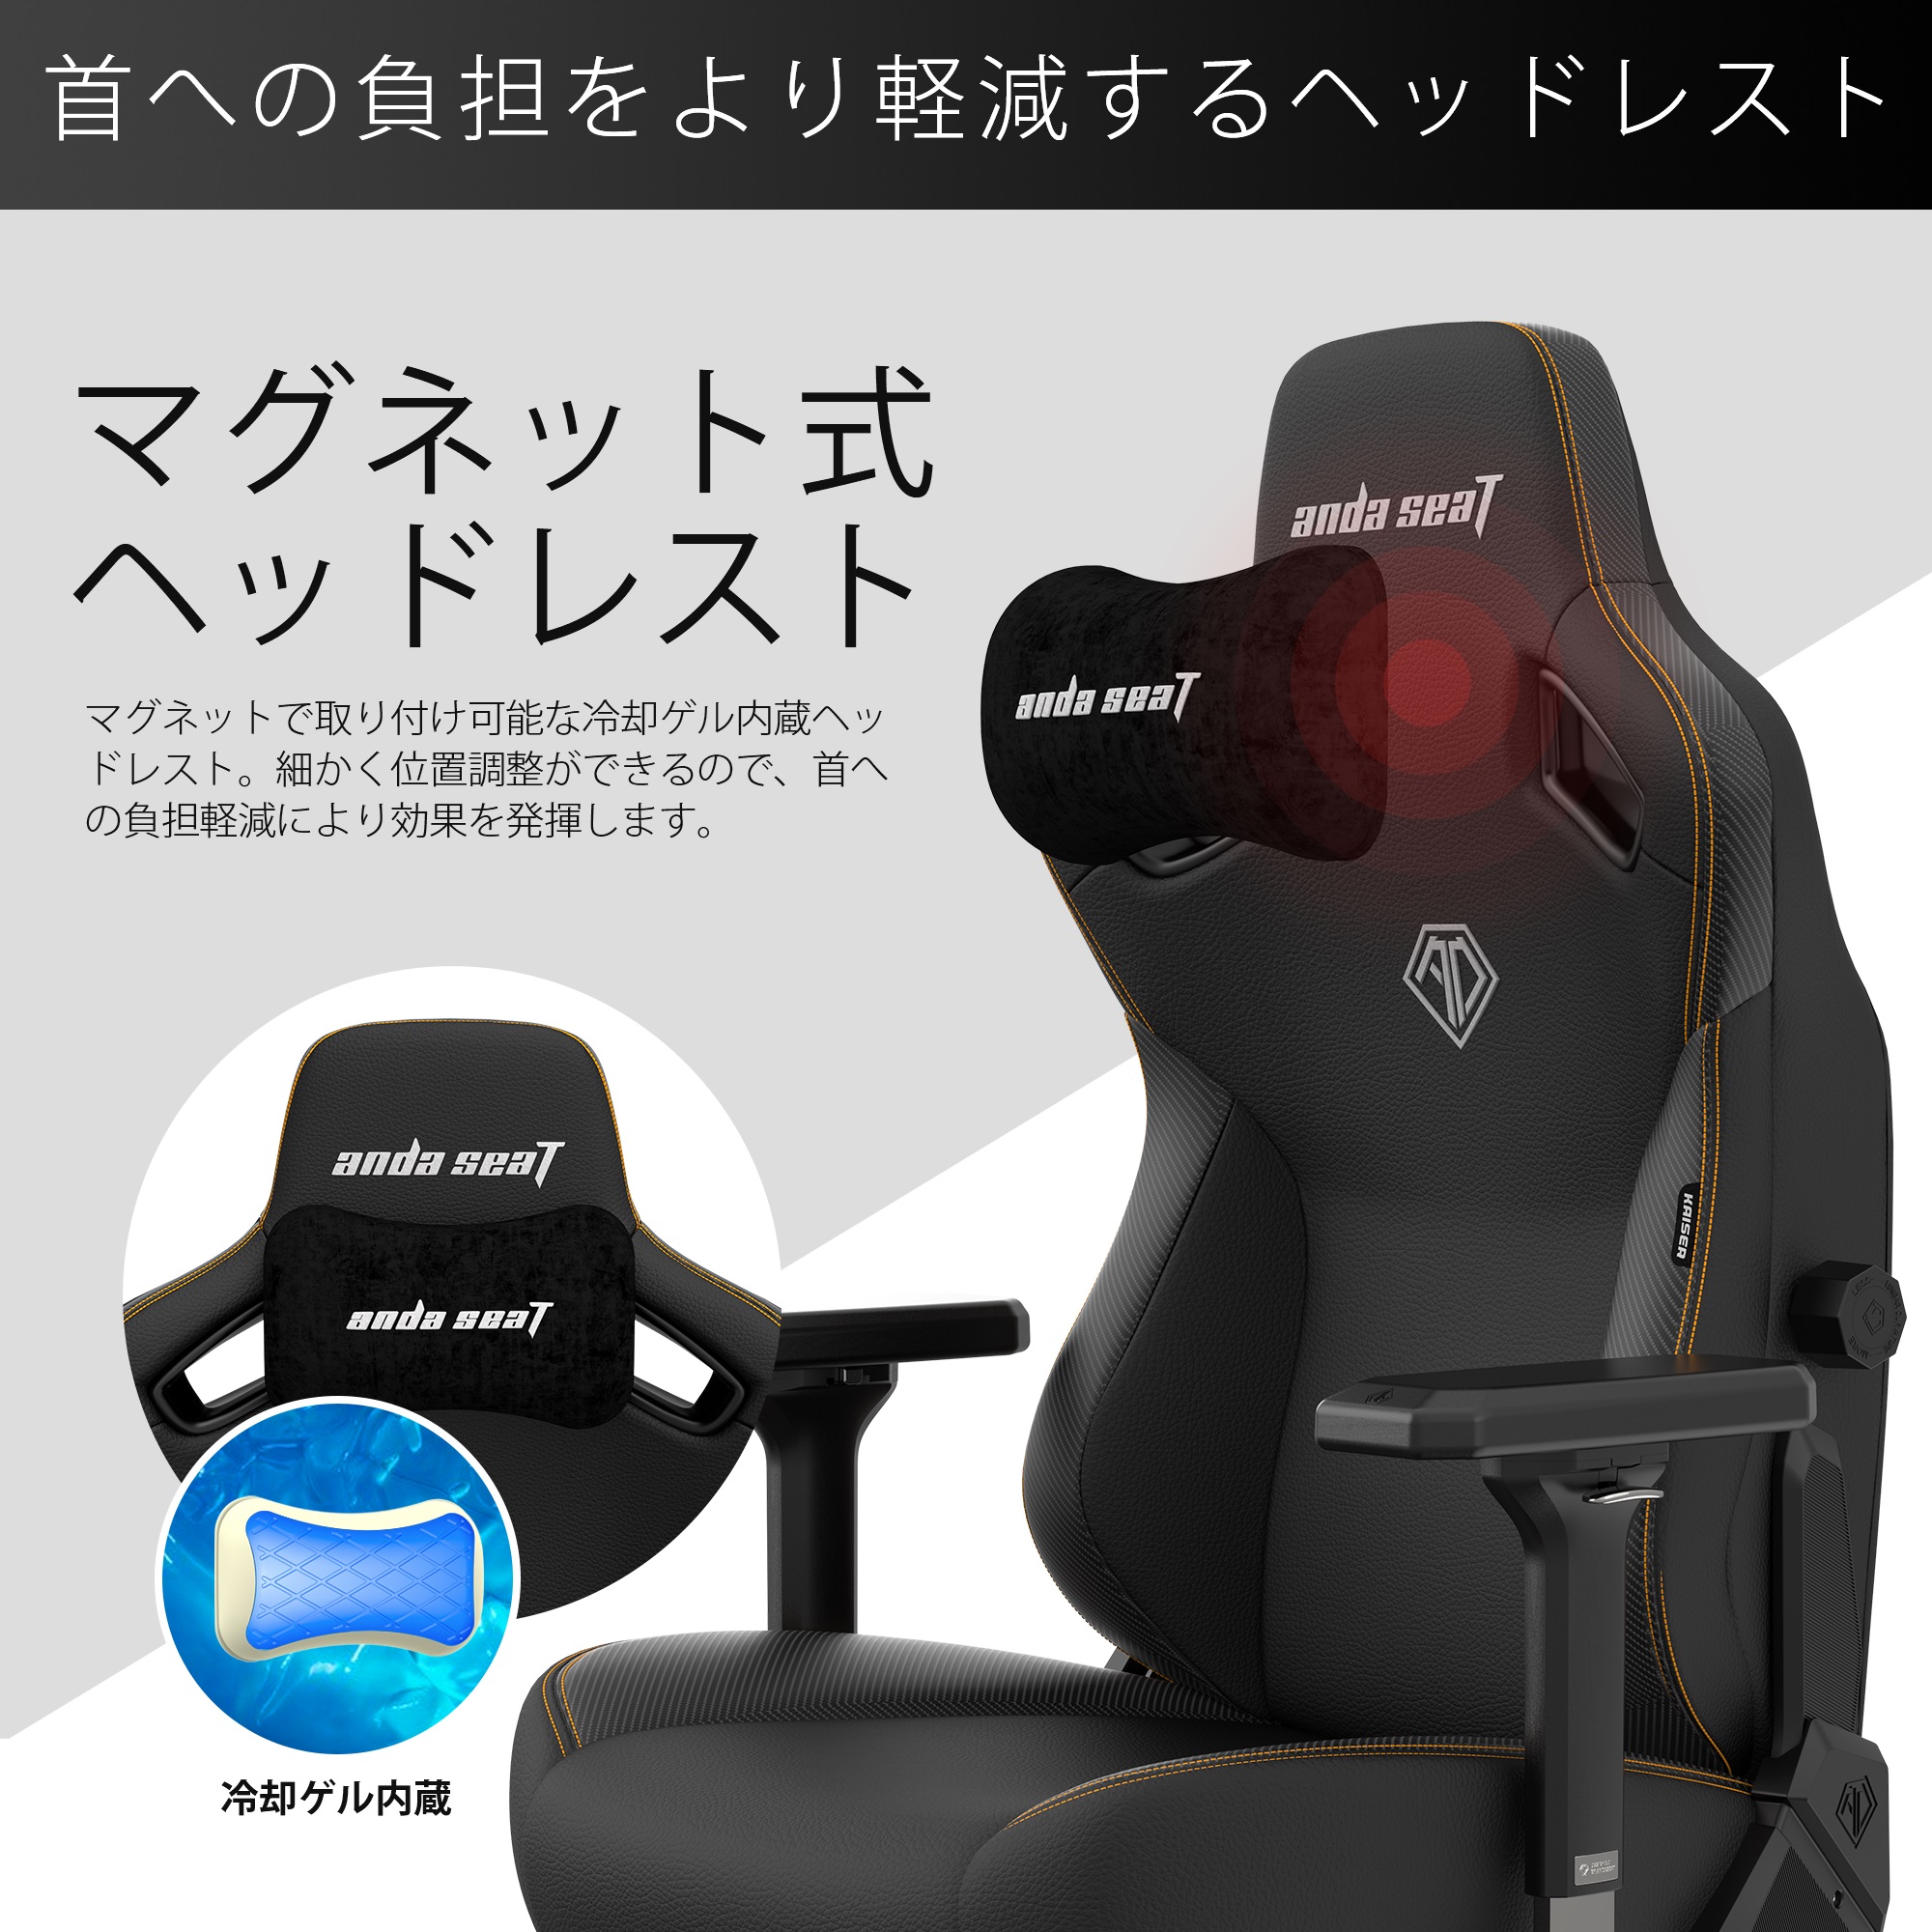 P10倍 ゲーミングチェア 茶 ブラウン ゲーム用 椅子 アンダーシート カイザー3 Andaseat Kaiser 3